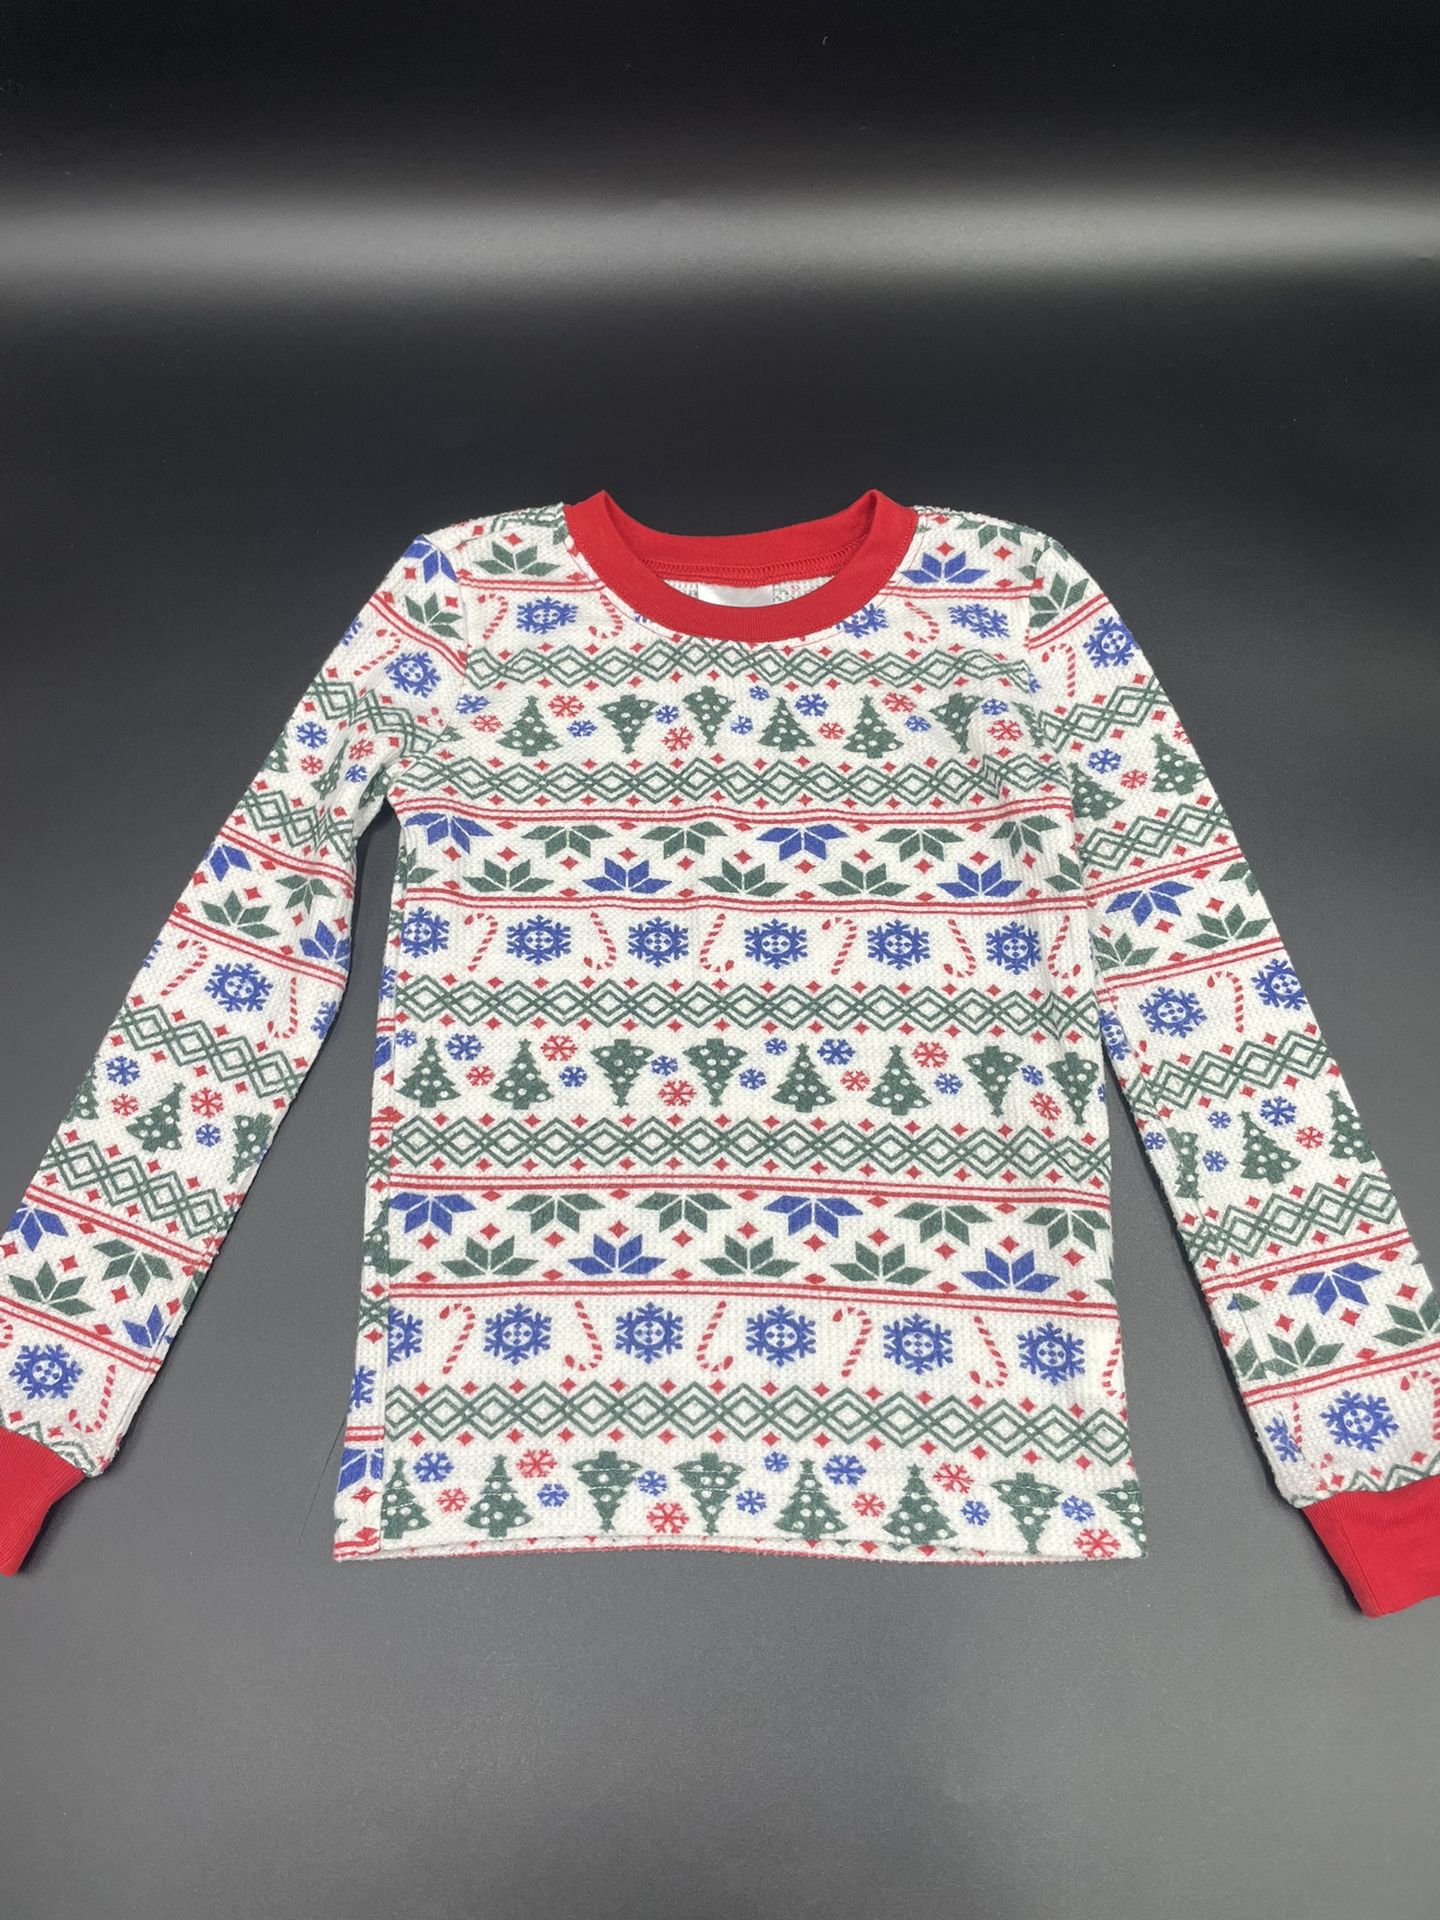 Nordstrom 4T sleepwear Christmas tree/snowflake pajama set